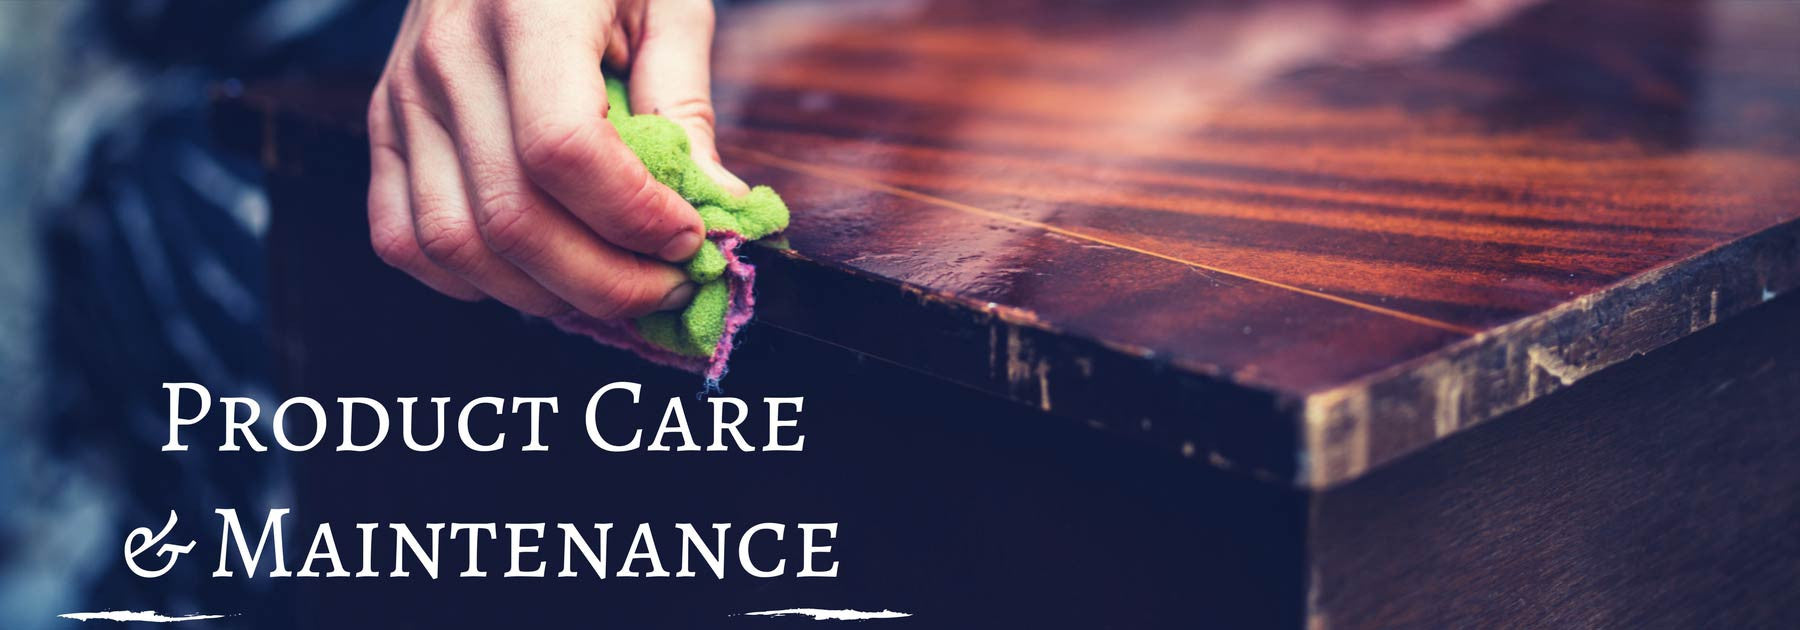 Care & Maintenance